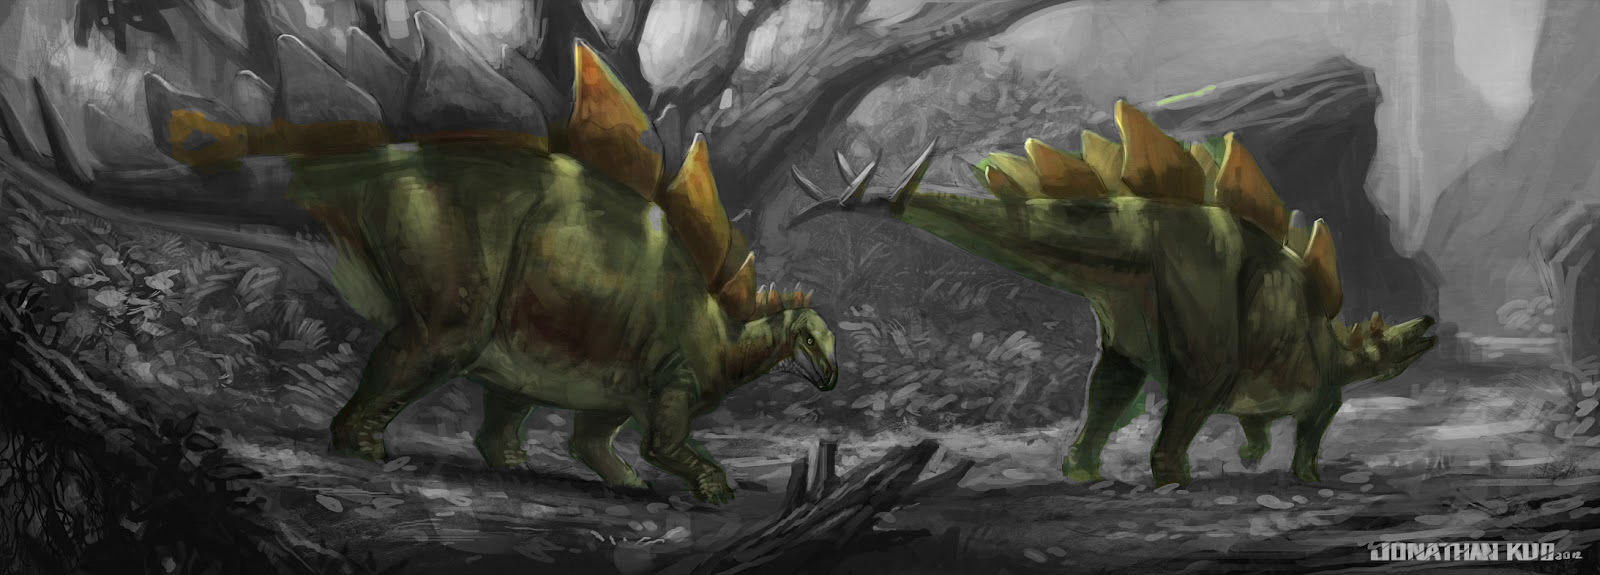 Stegosaurus Background Wallpaper 